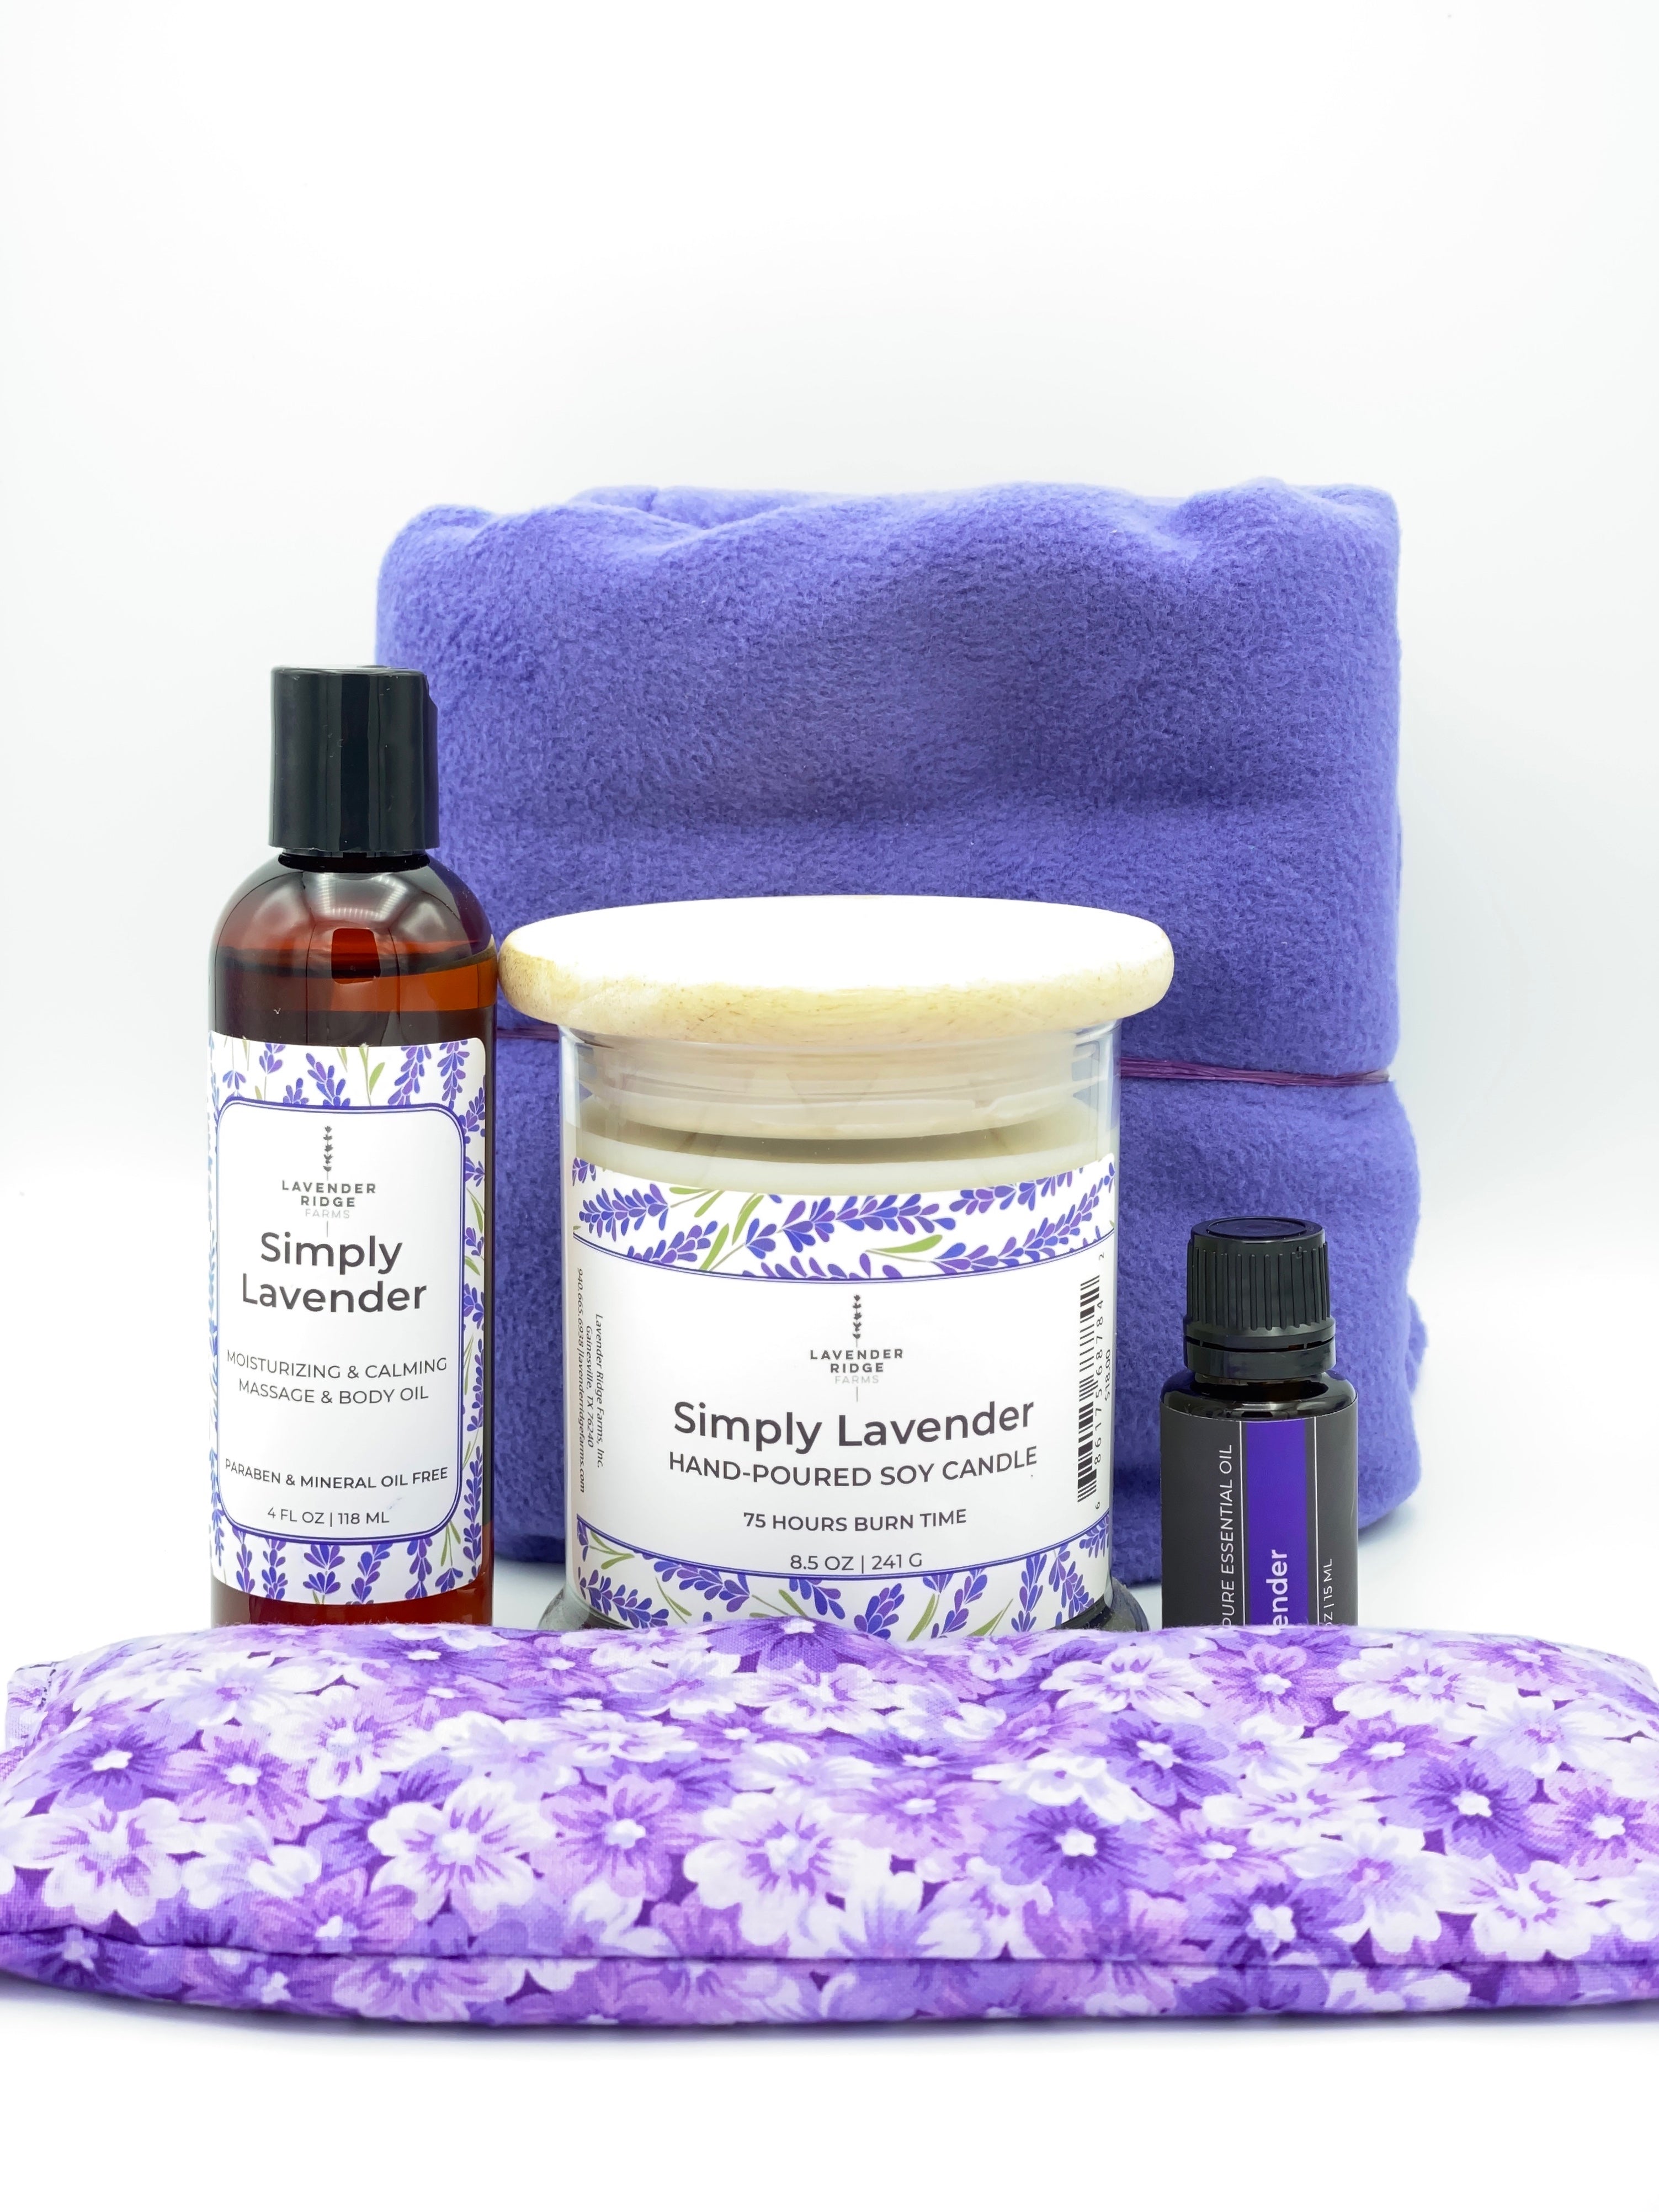 28pc Essential Oils Gift Set - Lavender, Vanilla, Sage, more